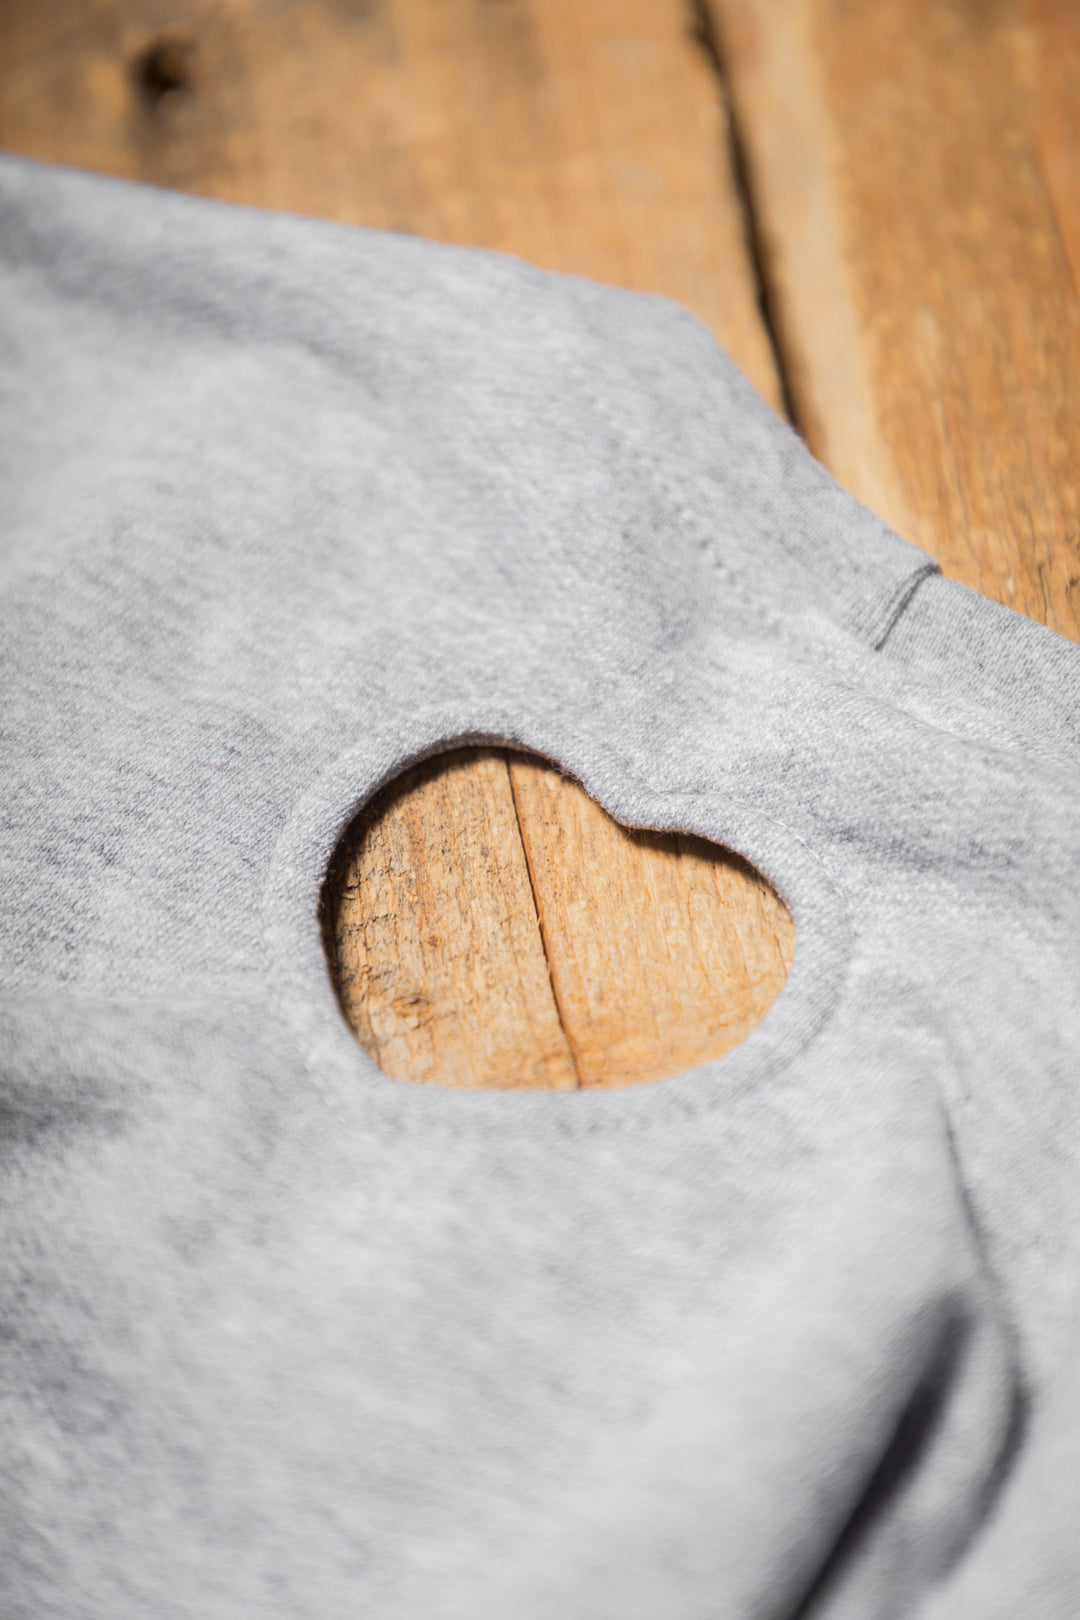 Fleece crewneck sweater with heart back [Heart]  [Baby]